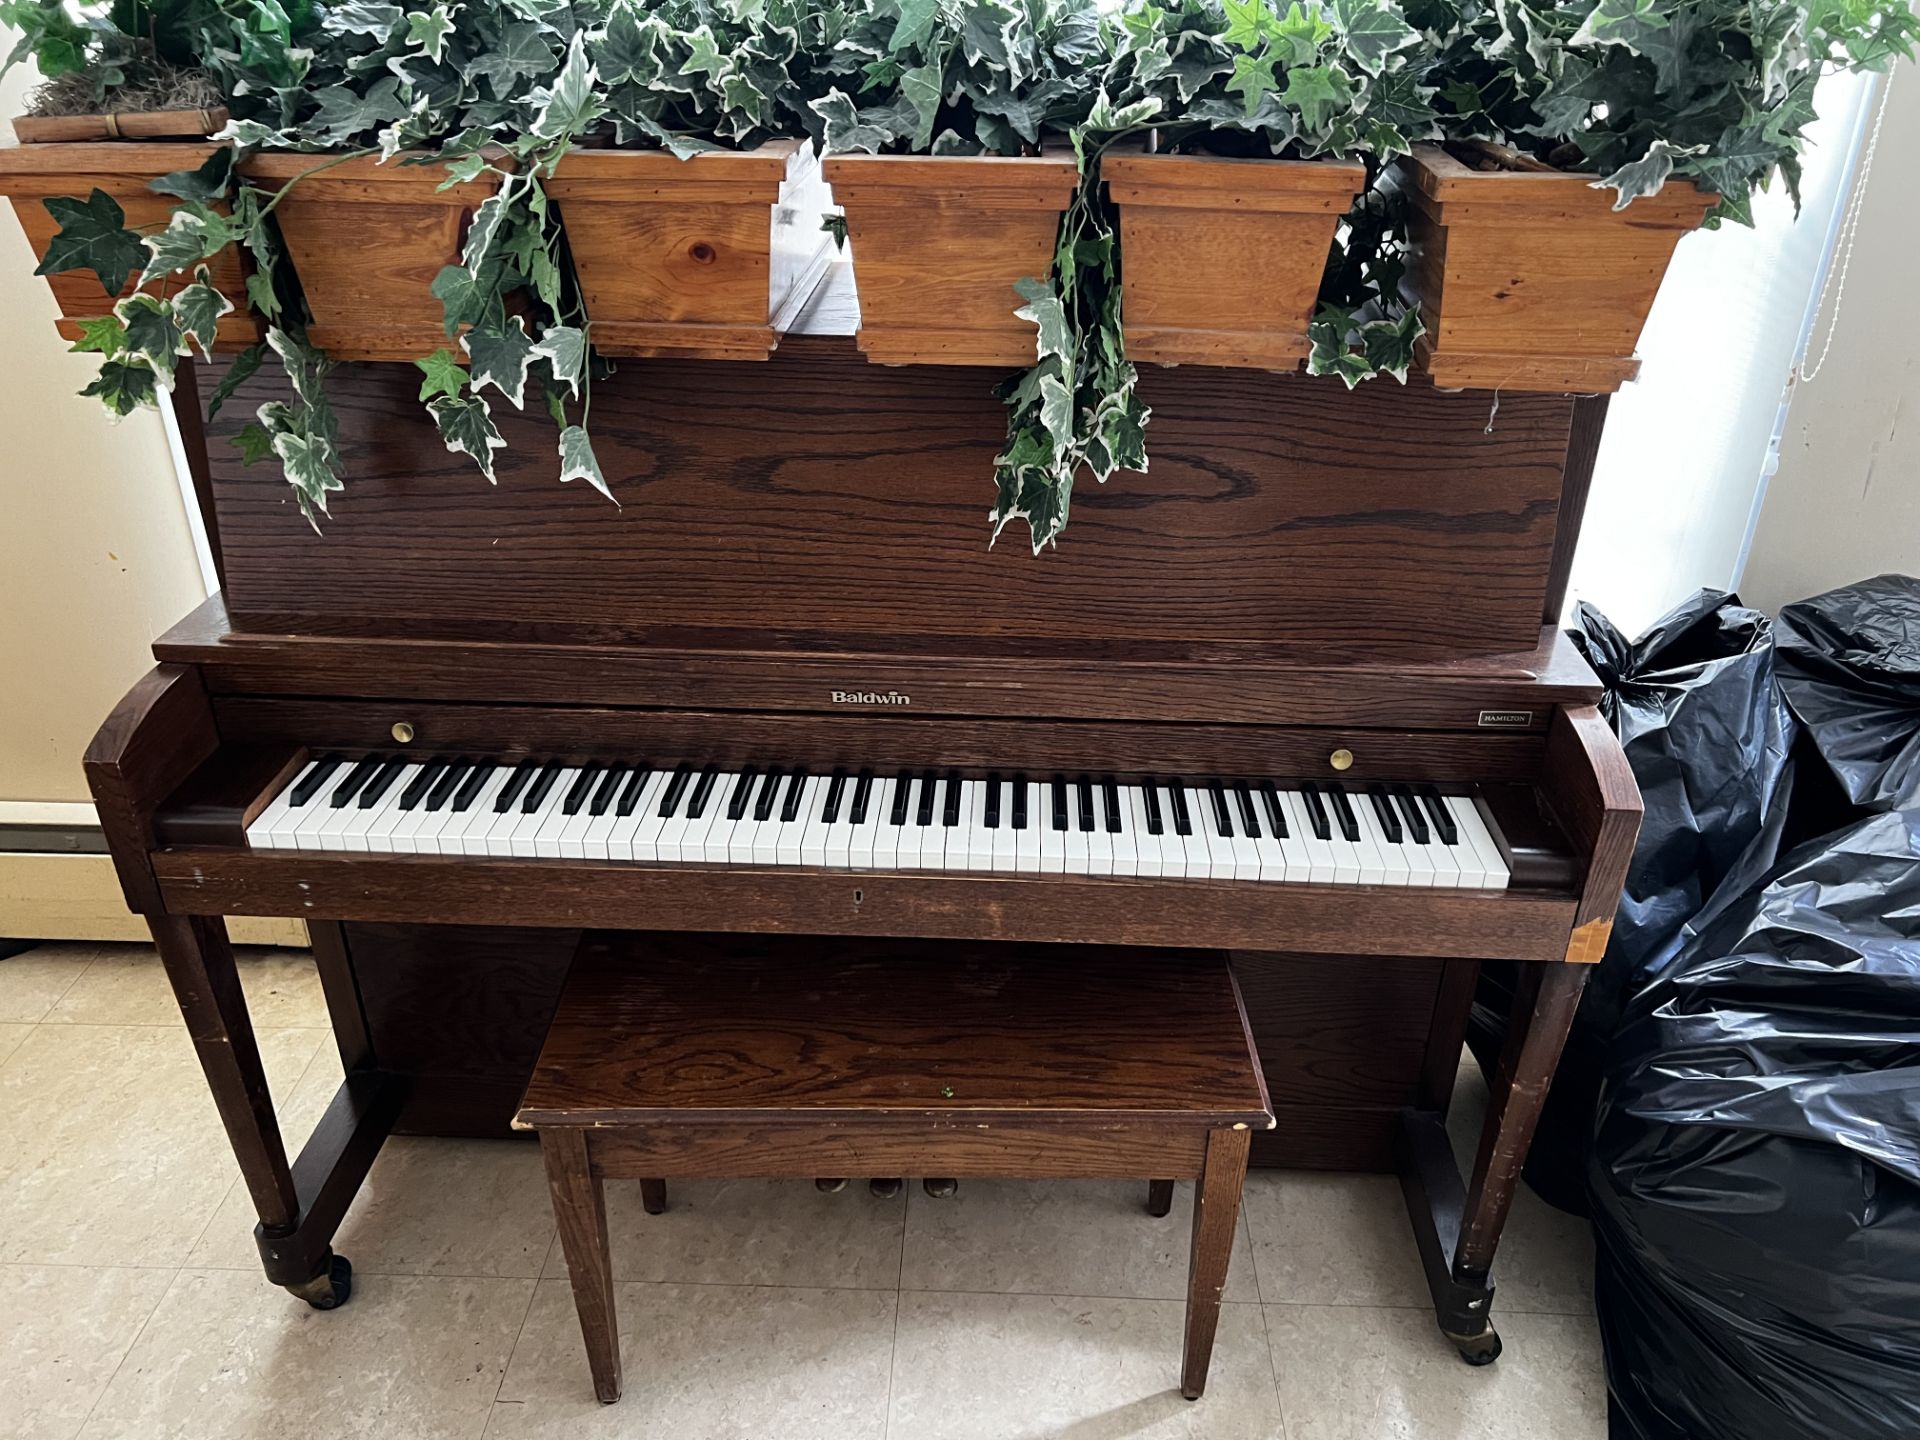 Hamilton Baldwin Piano with Bench